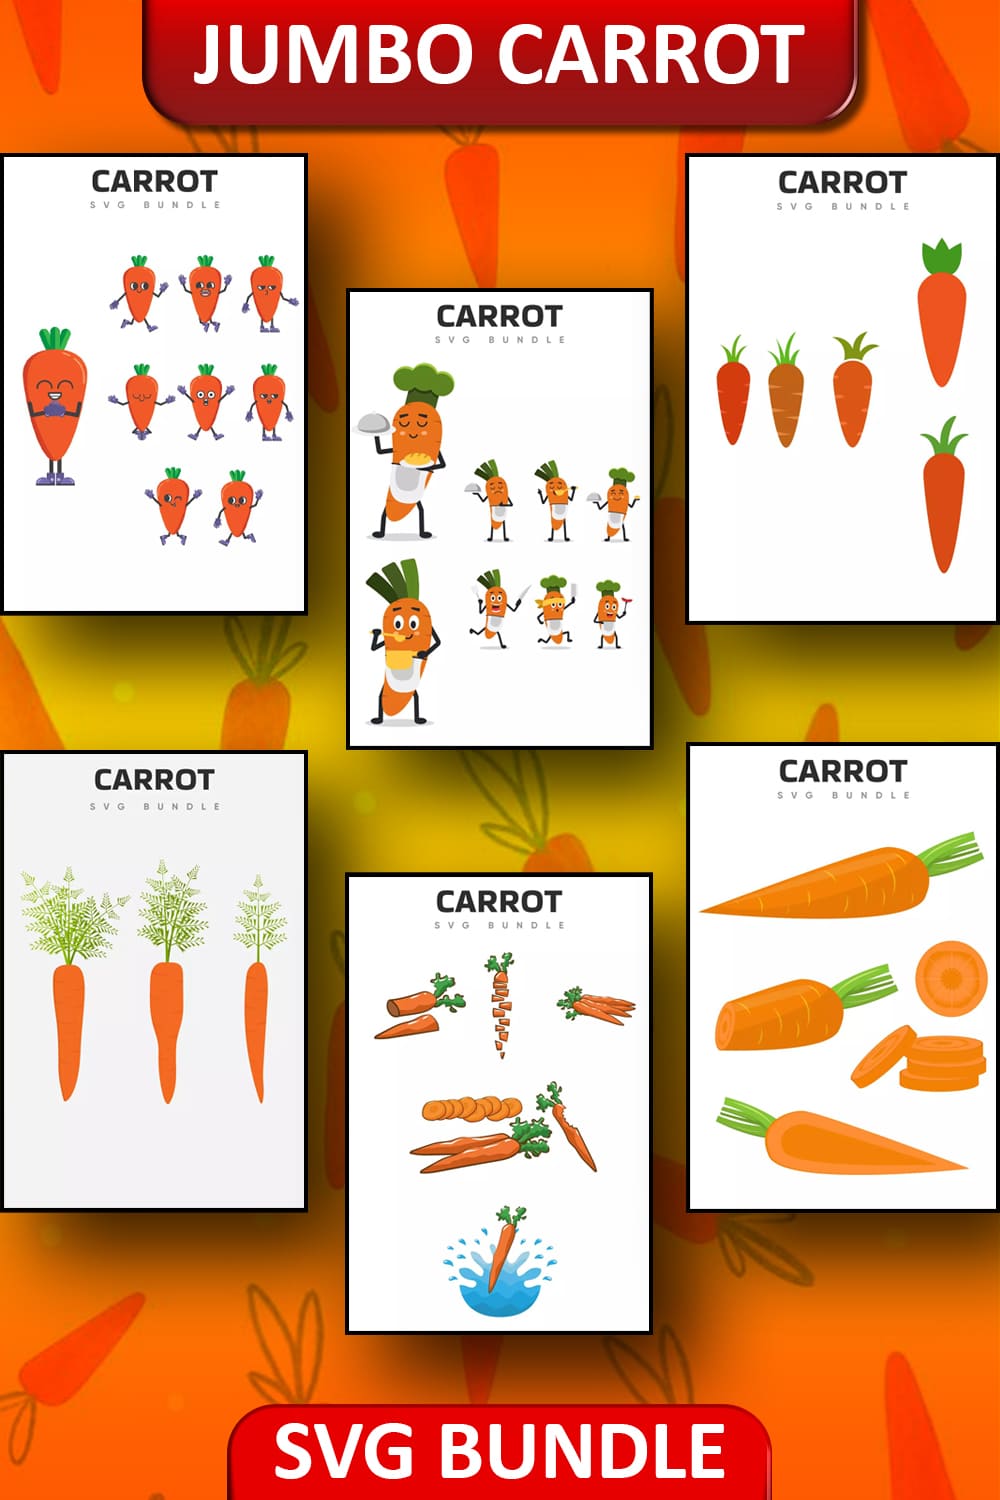 Jumbo Carrot SVG Bundle Pinterest.